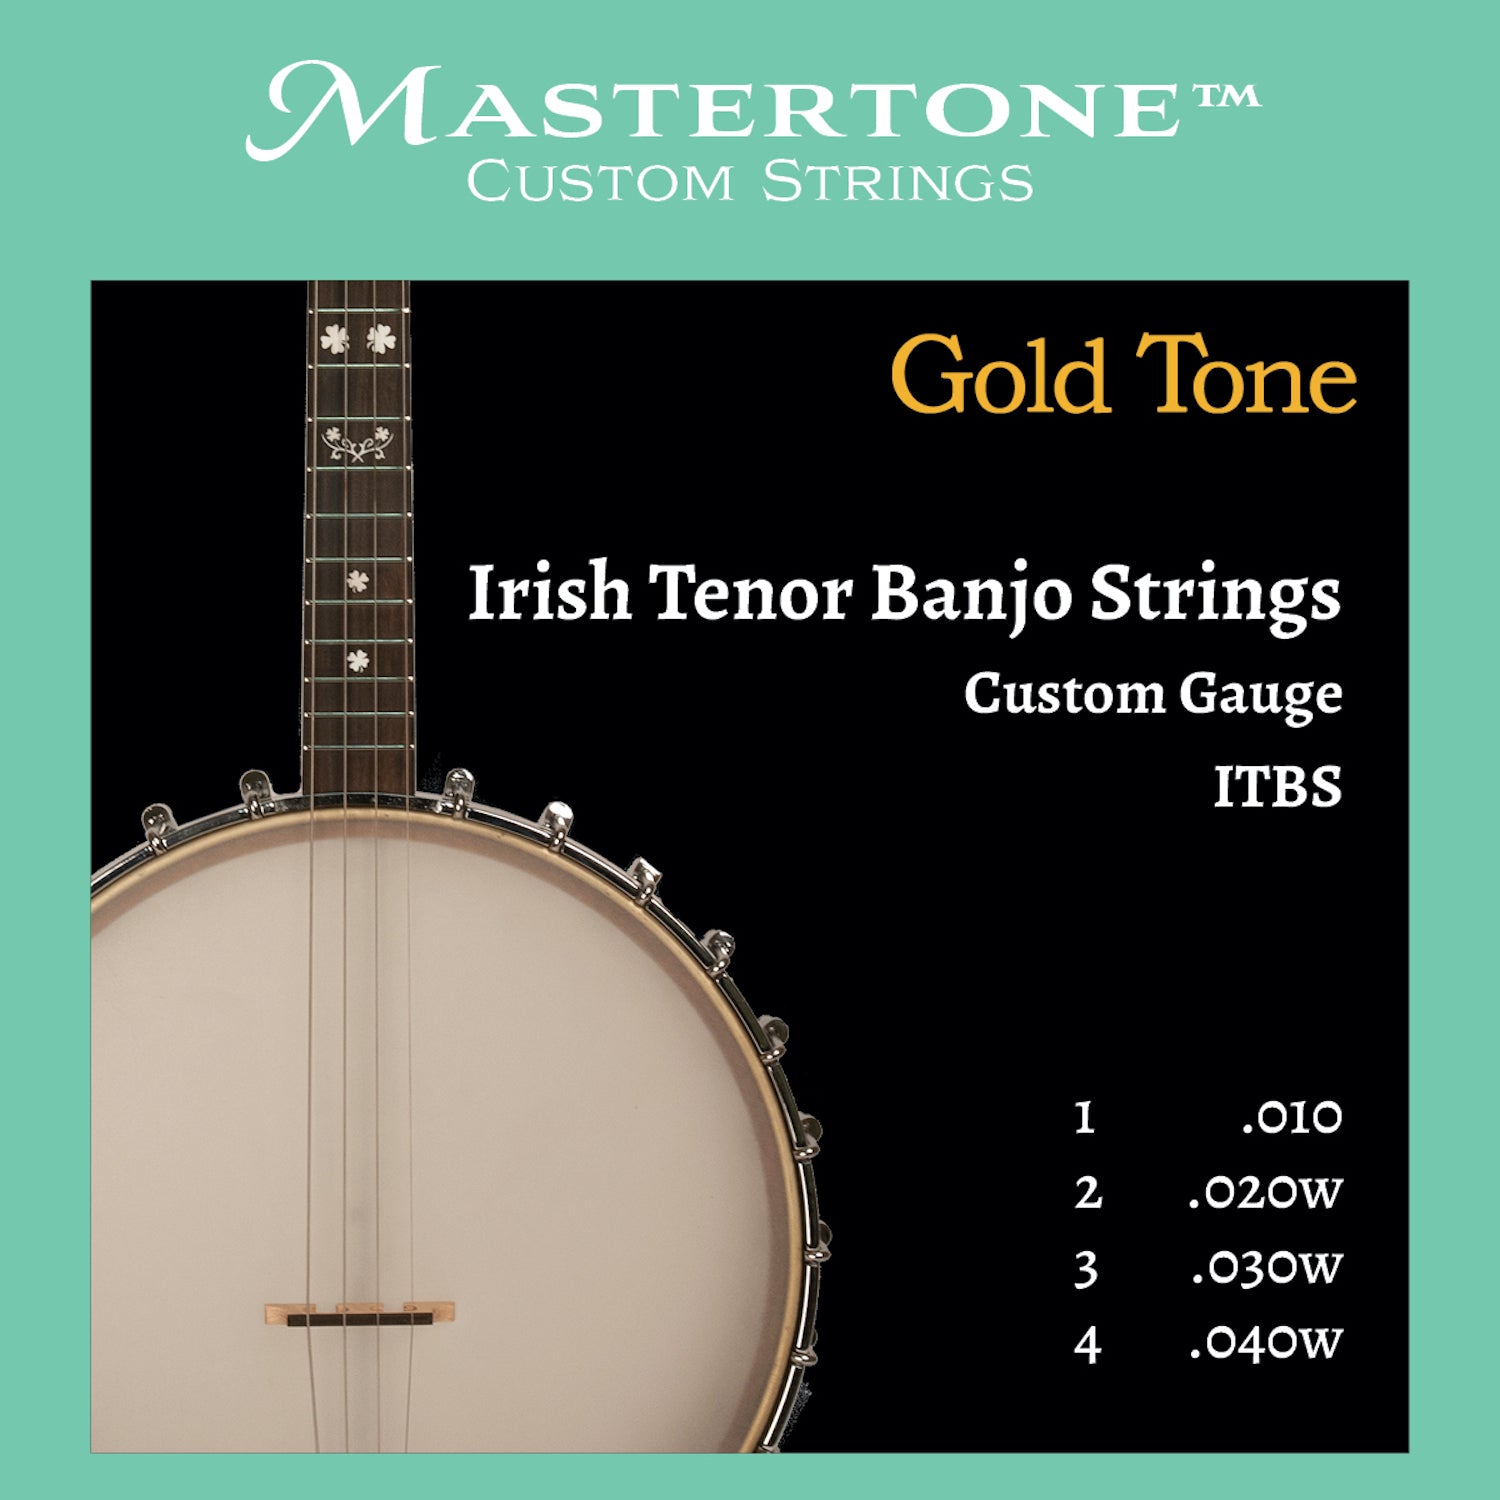 Gold Tone Strings  ITBS Irish Tenor Banjo strings